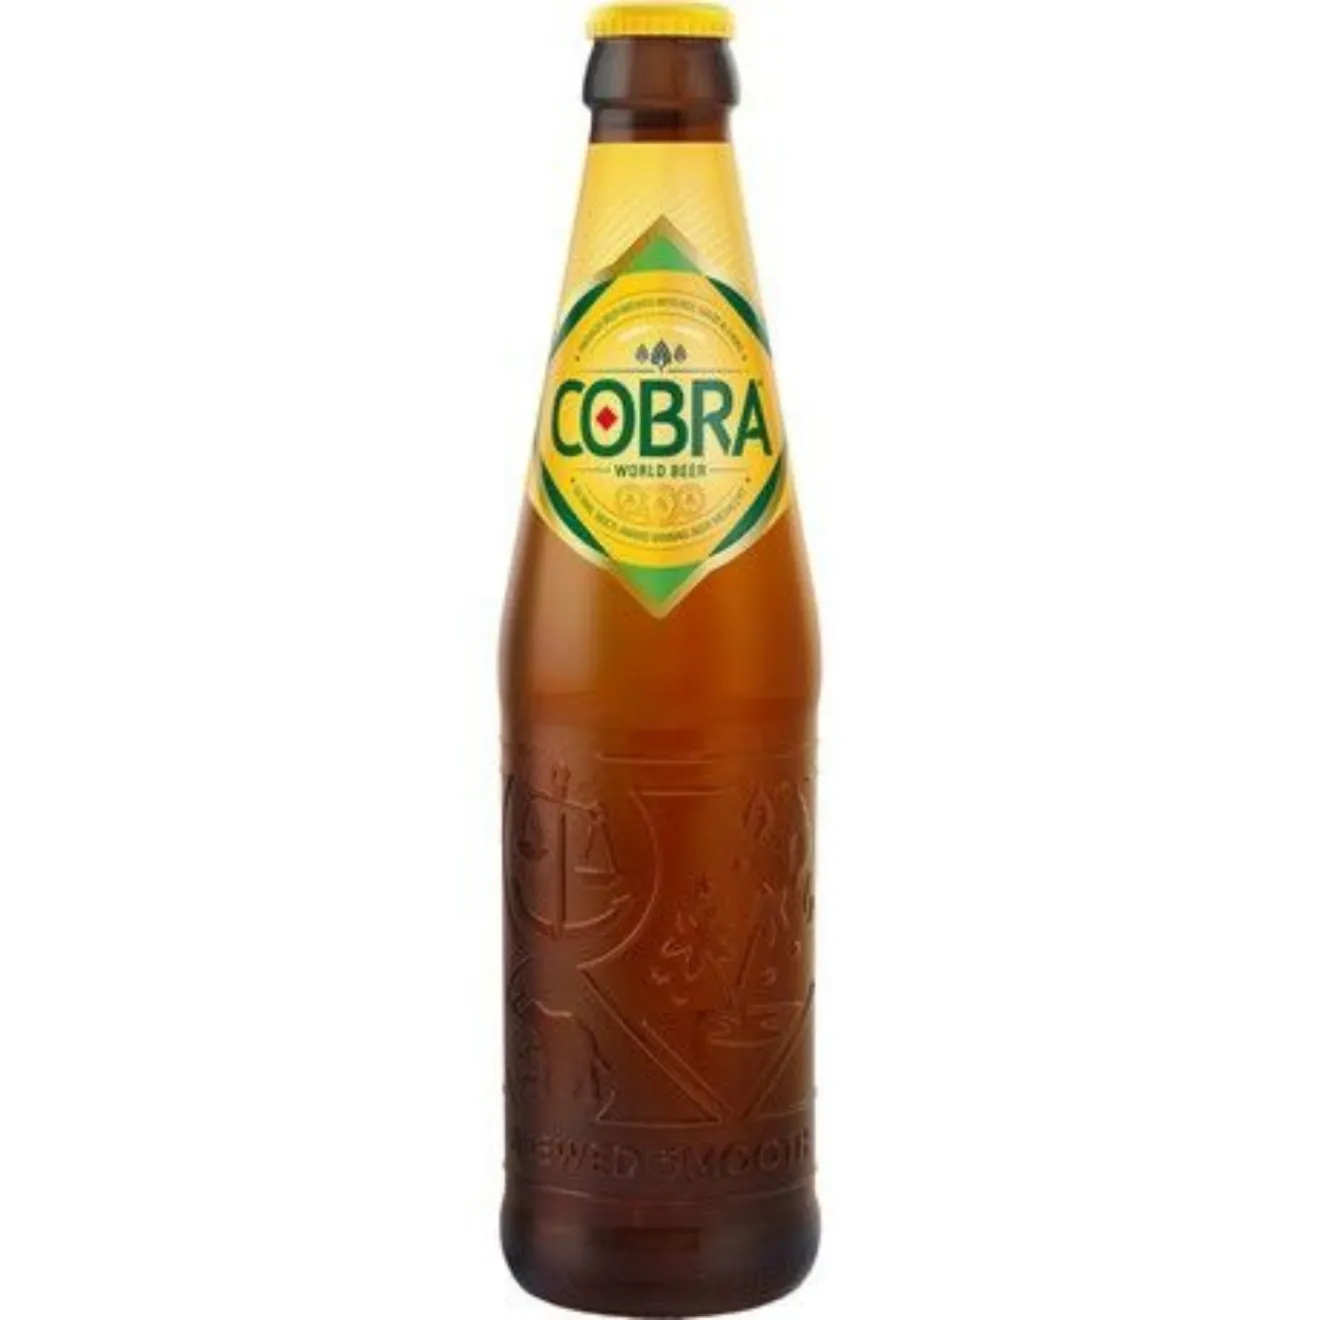 Cobra-world-beer